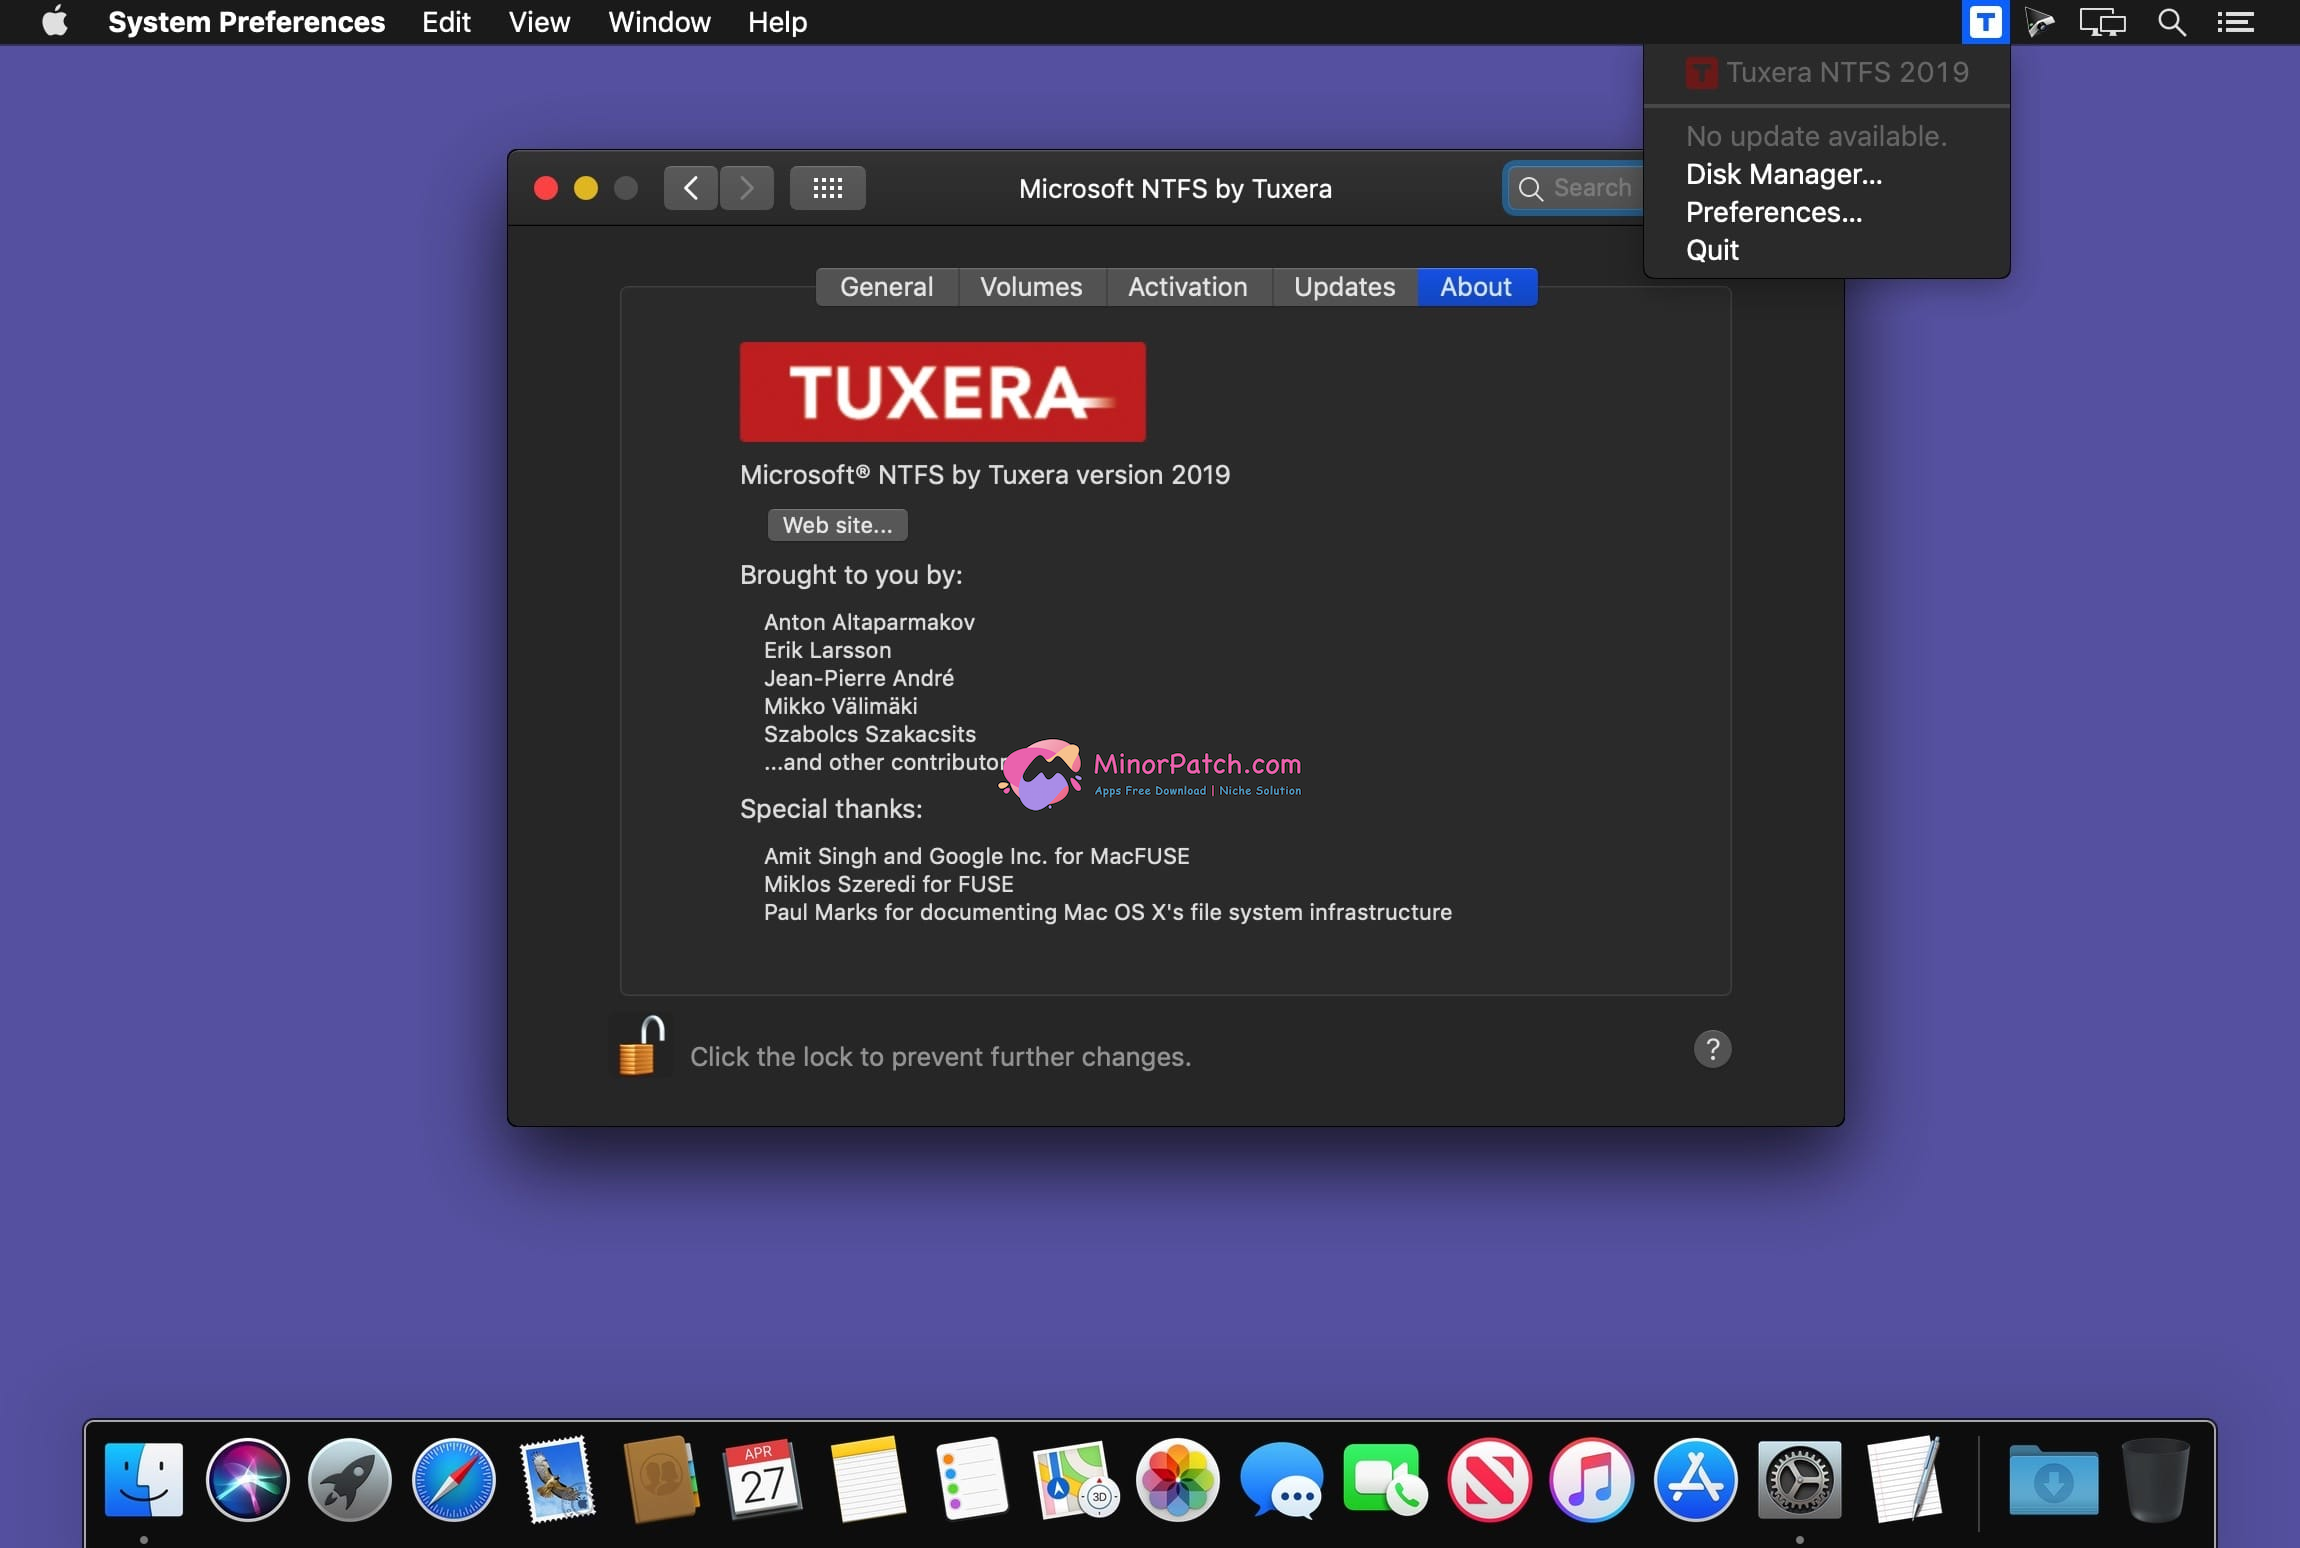 tuxera ntfs for mac full version